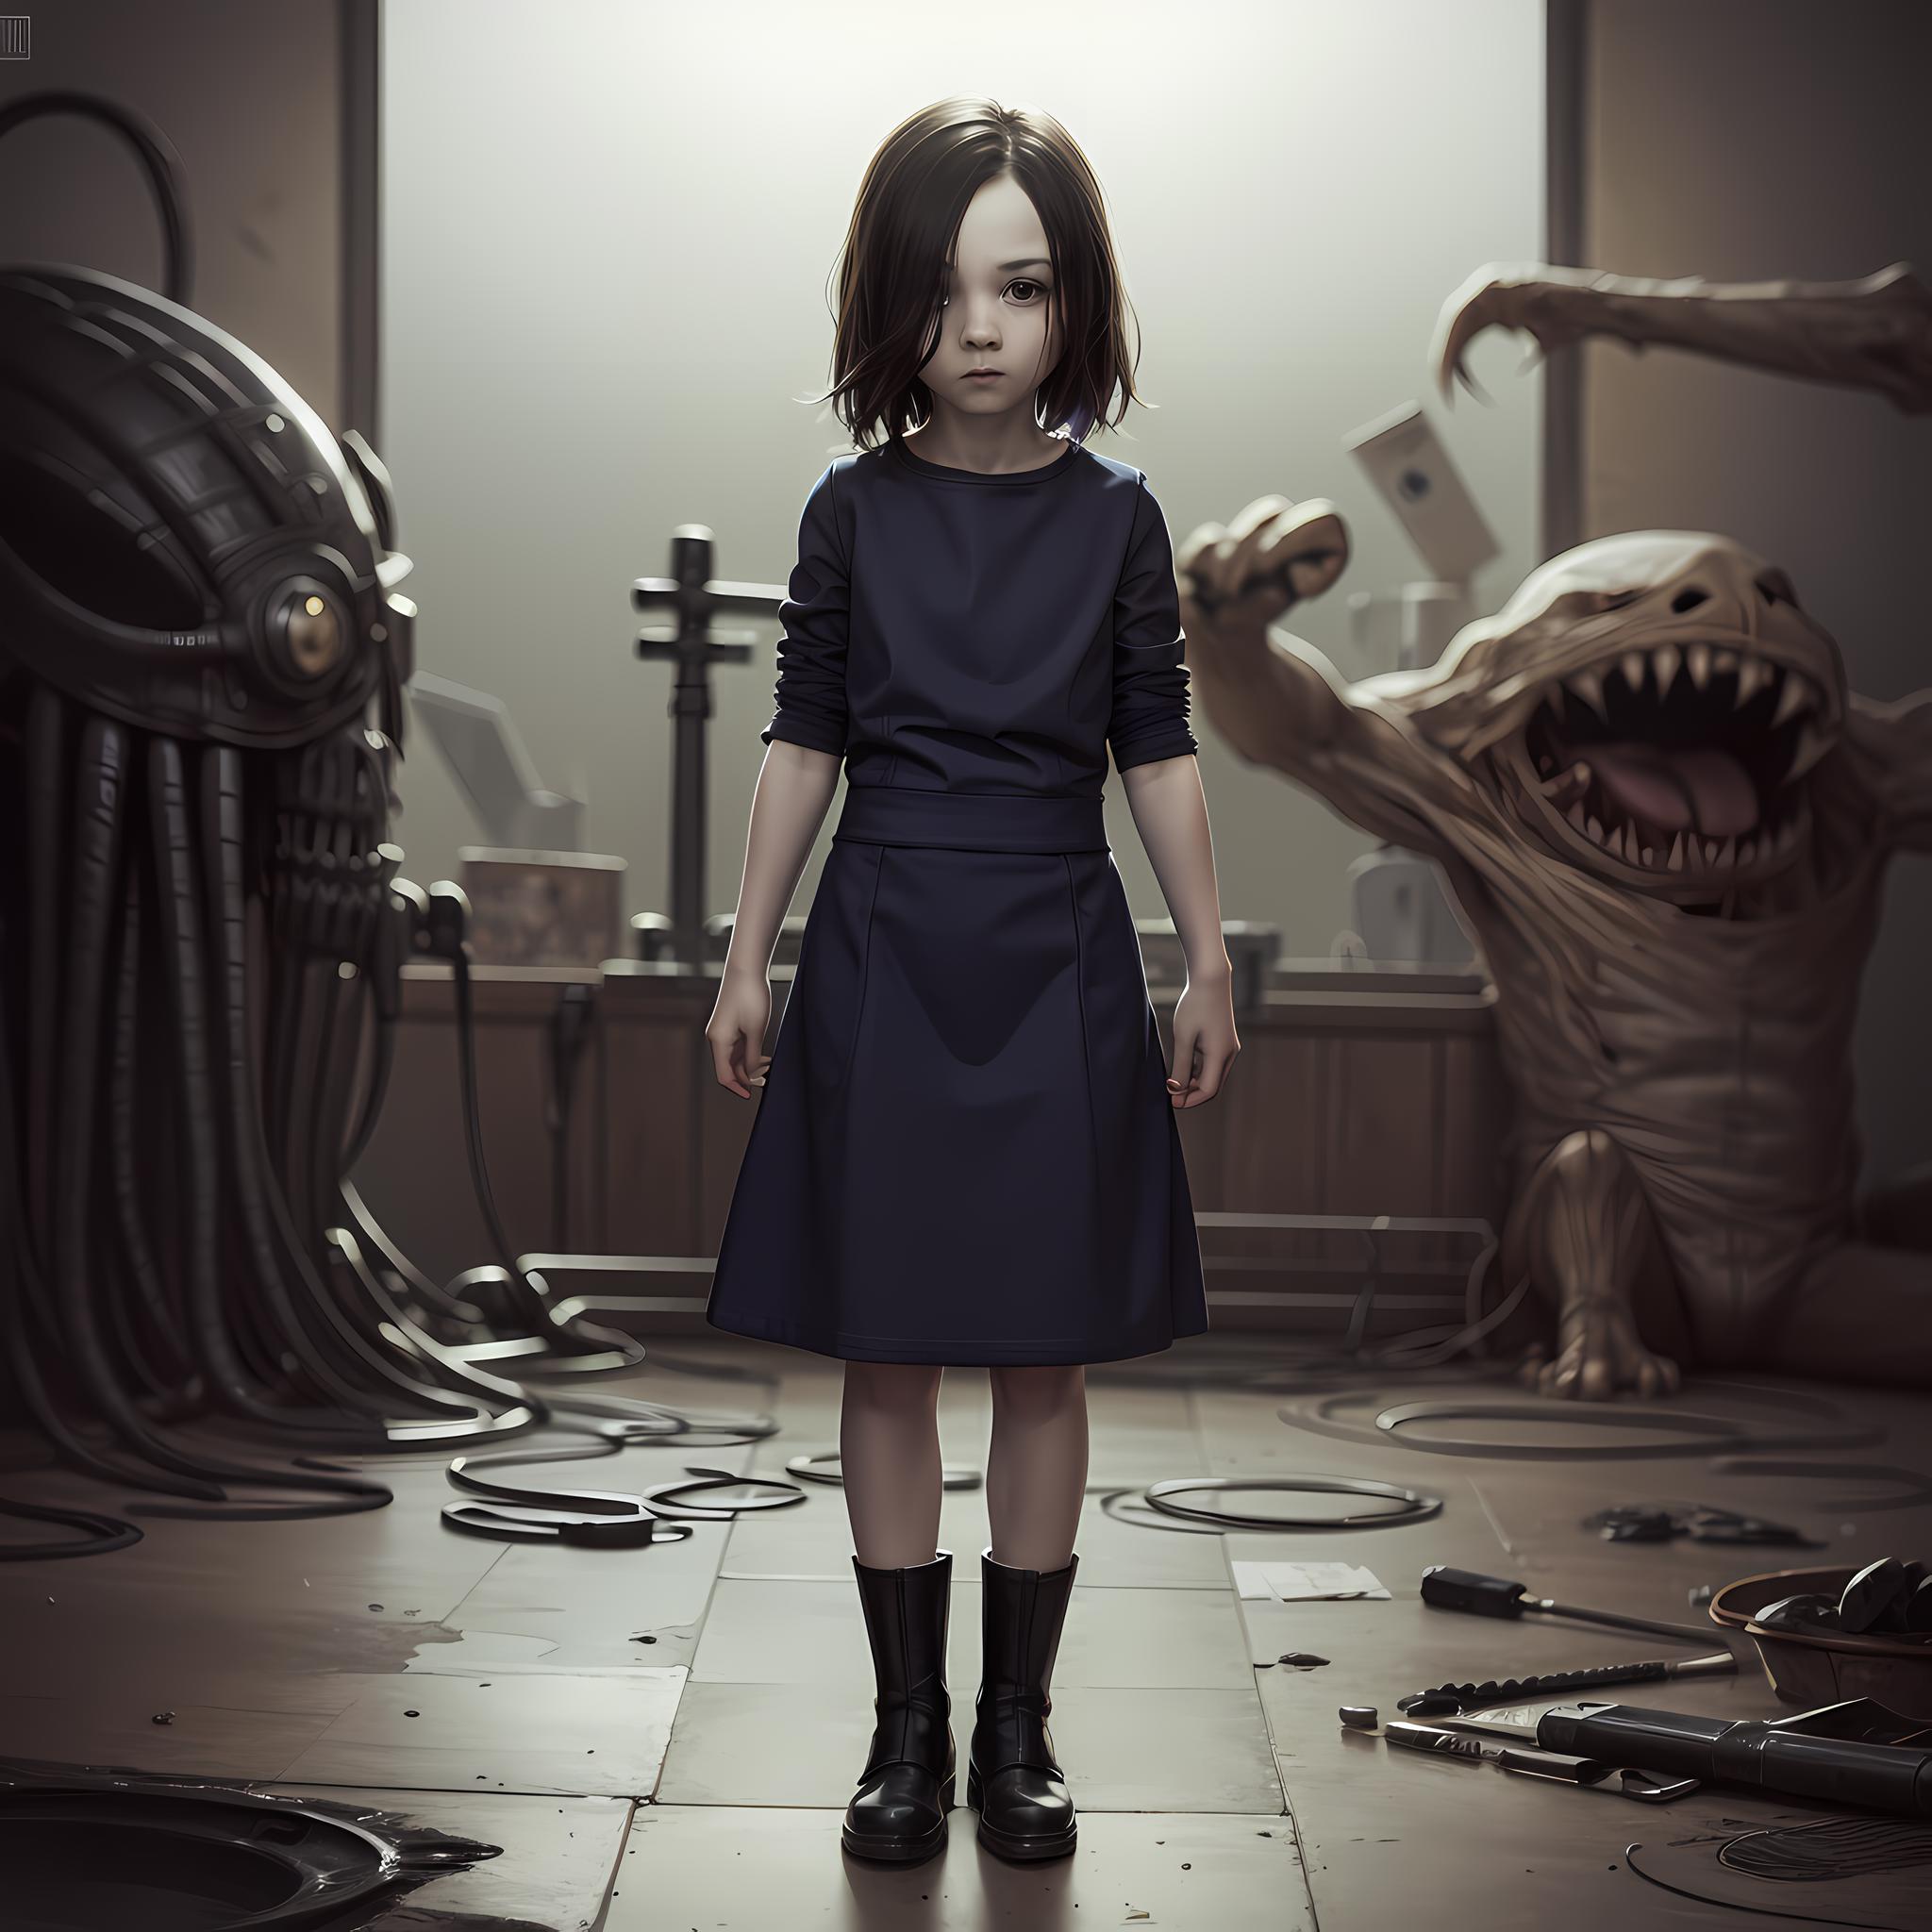 Eveline [ Resident Evil 7: Biohazard] image by TheGooder